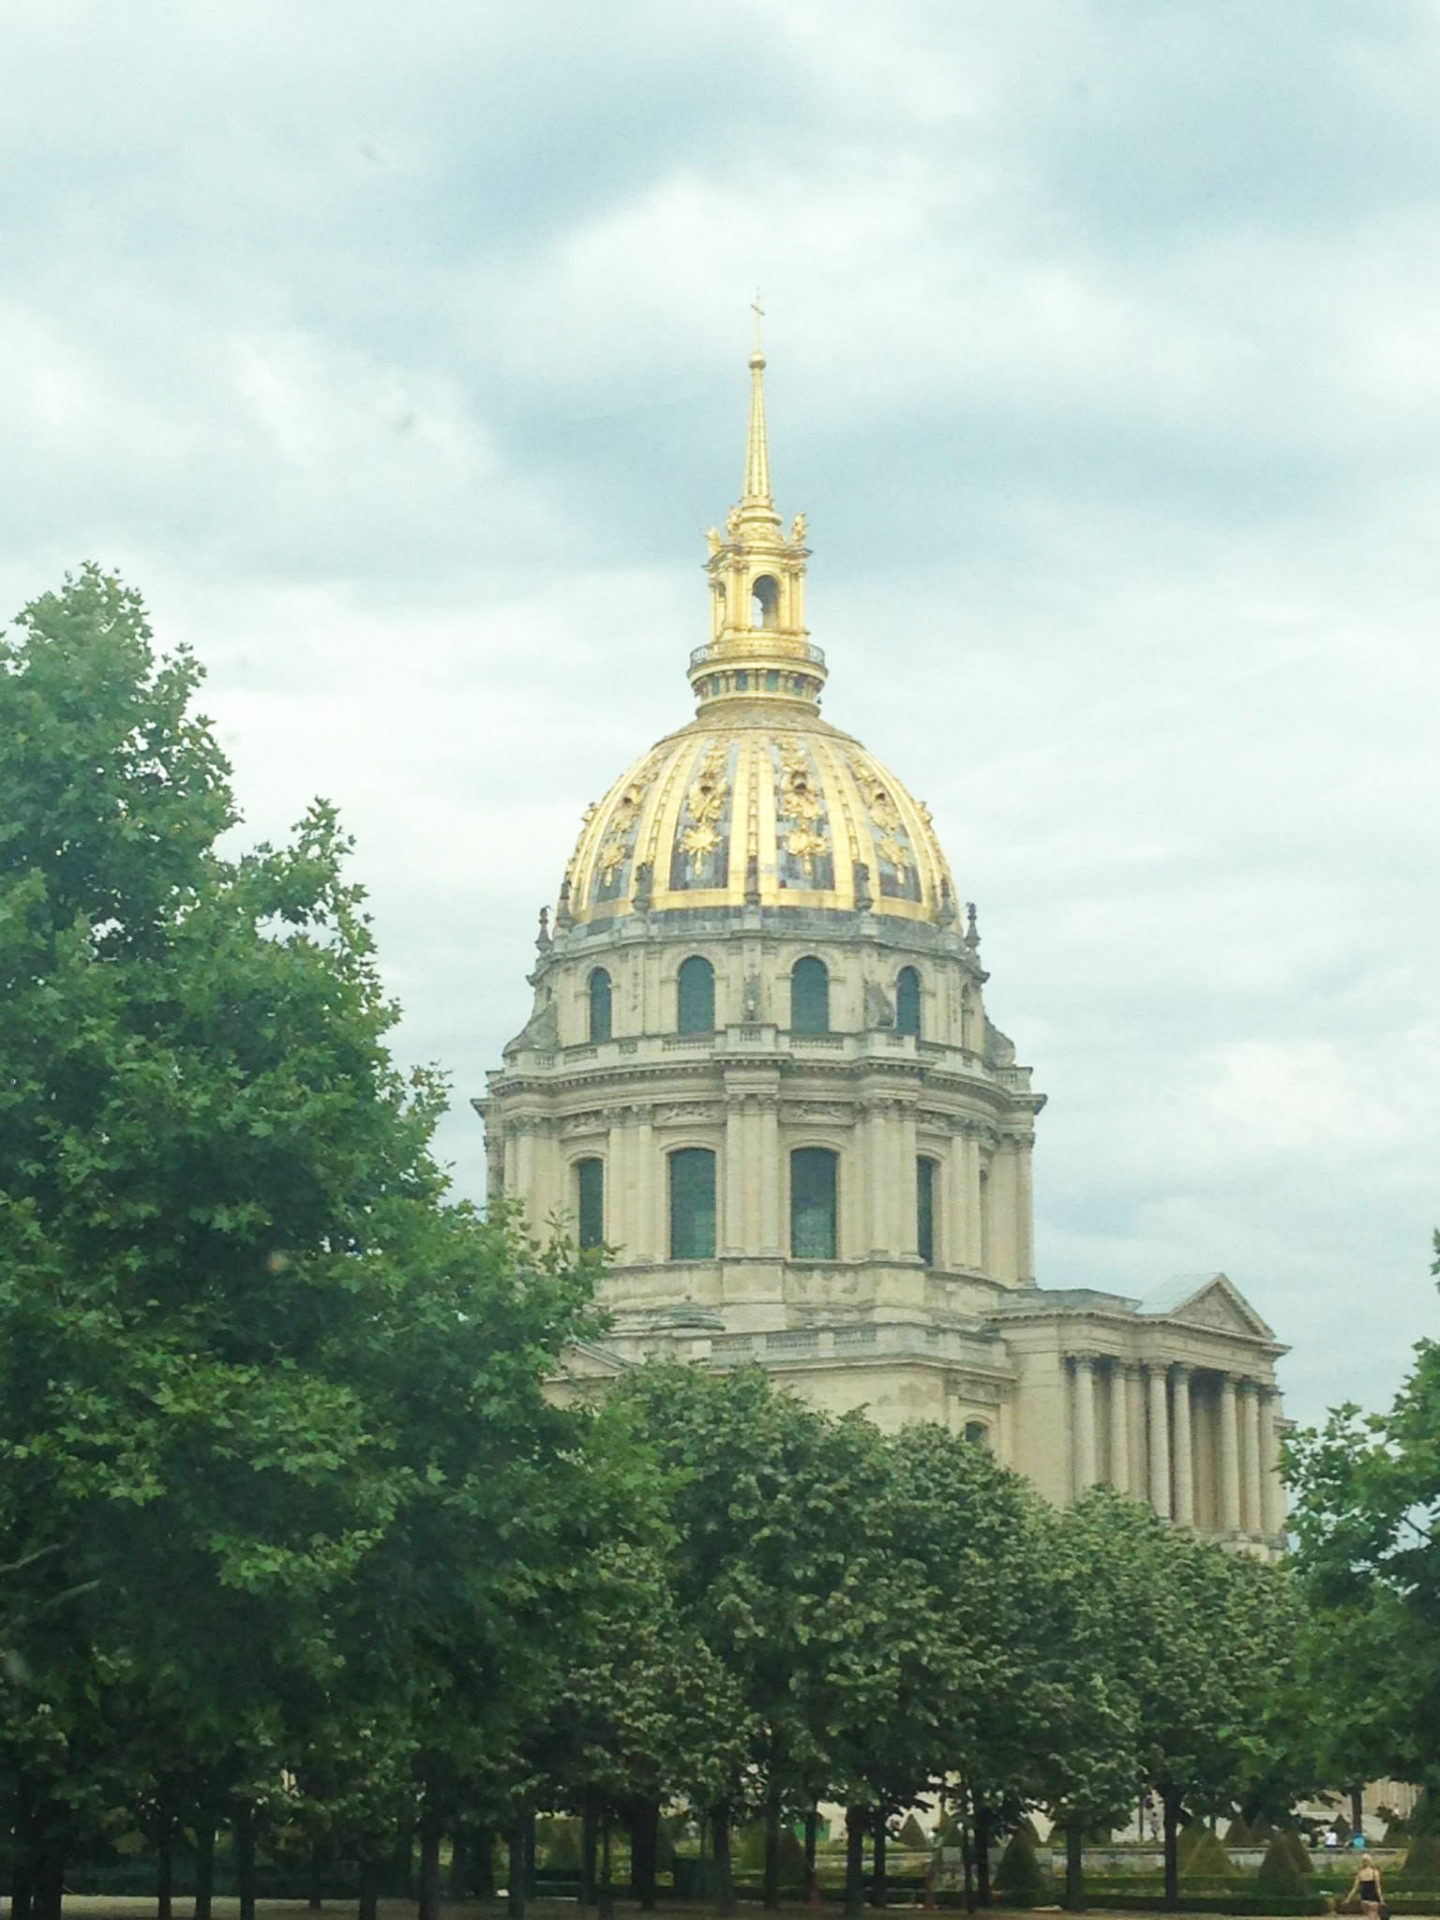 golden dome in paris france